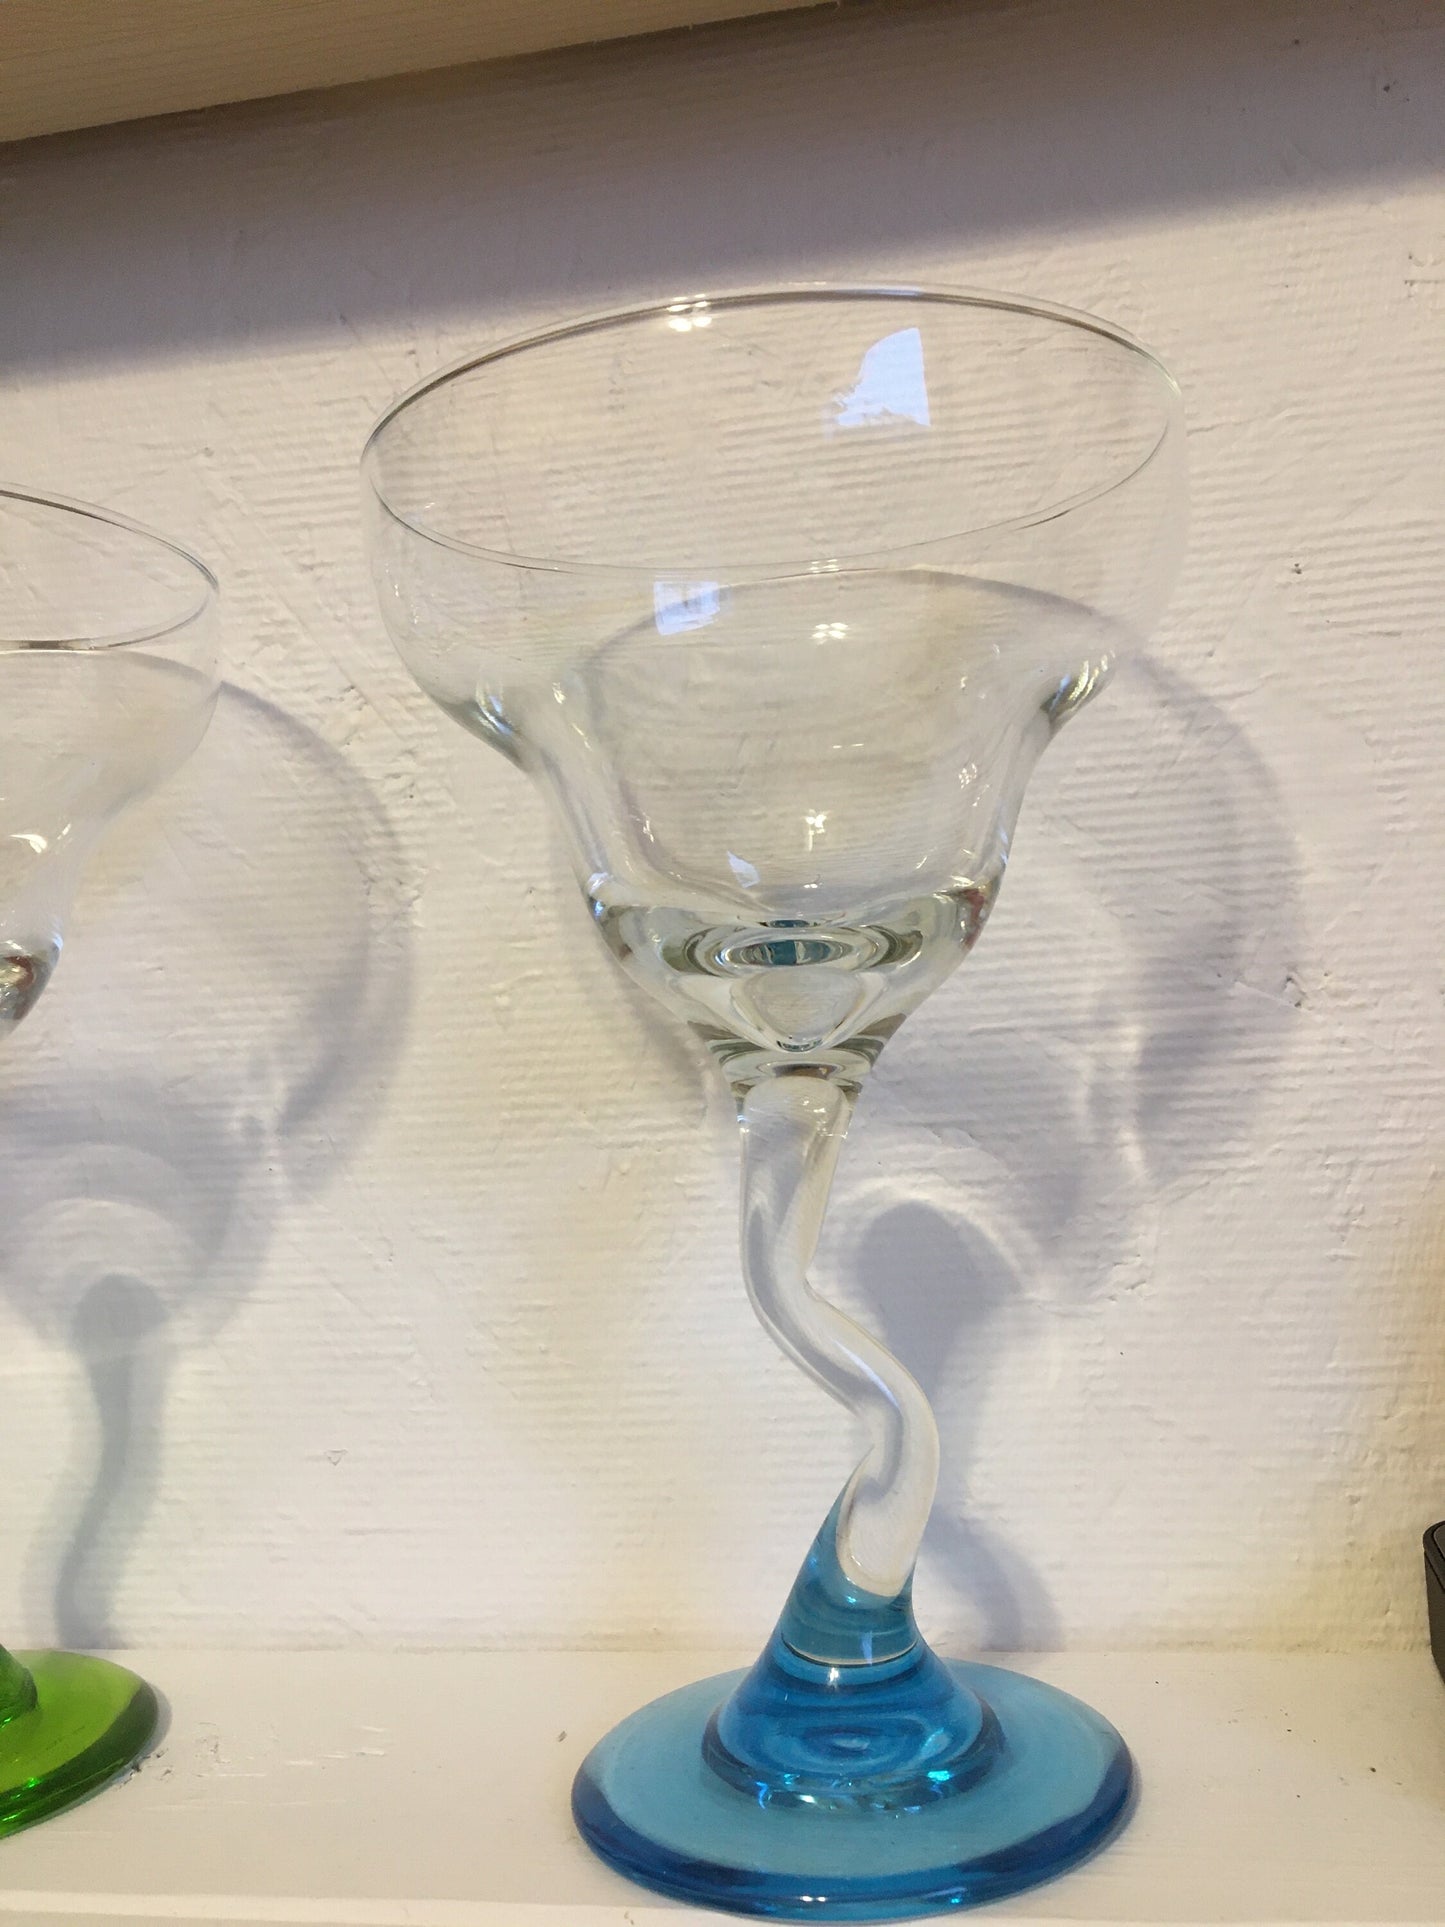 Set of 3 - Vintage Margarita Glasses with Bent Stems - Libbey Glassware